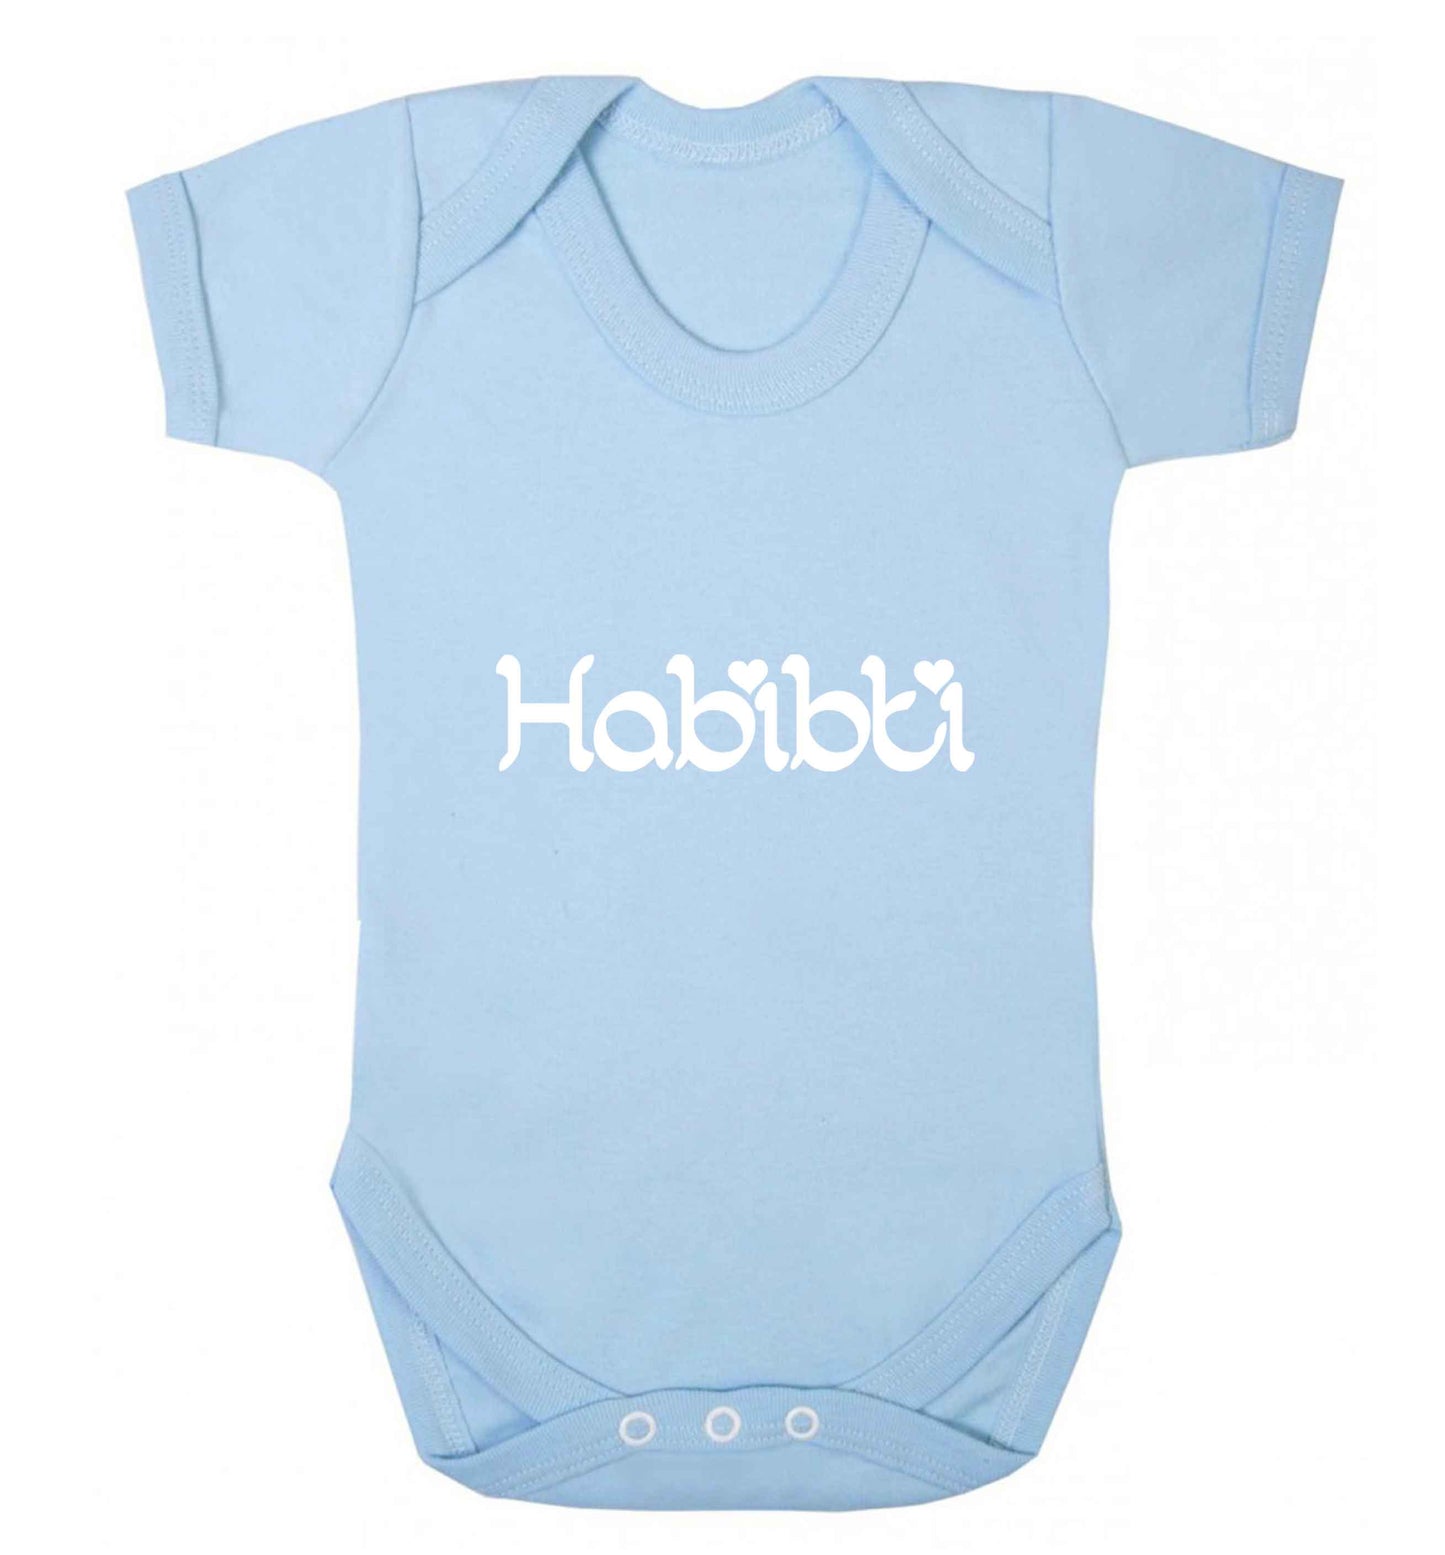 Habibiti baby vest pale blue 18-24 months